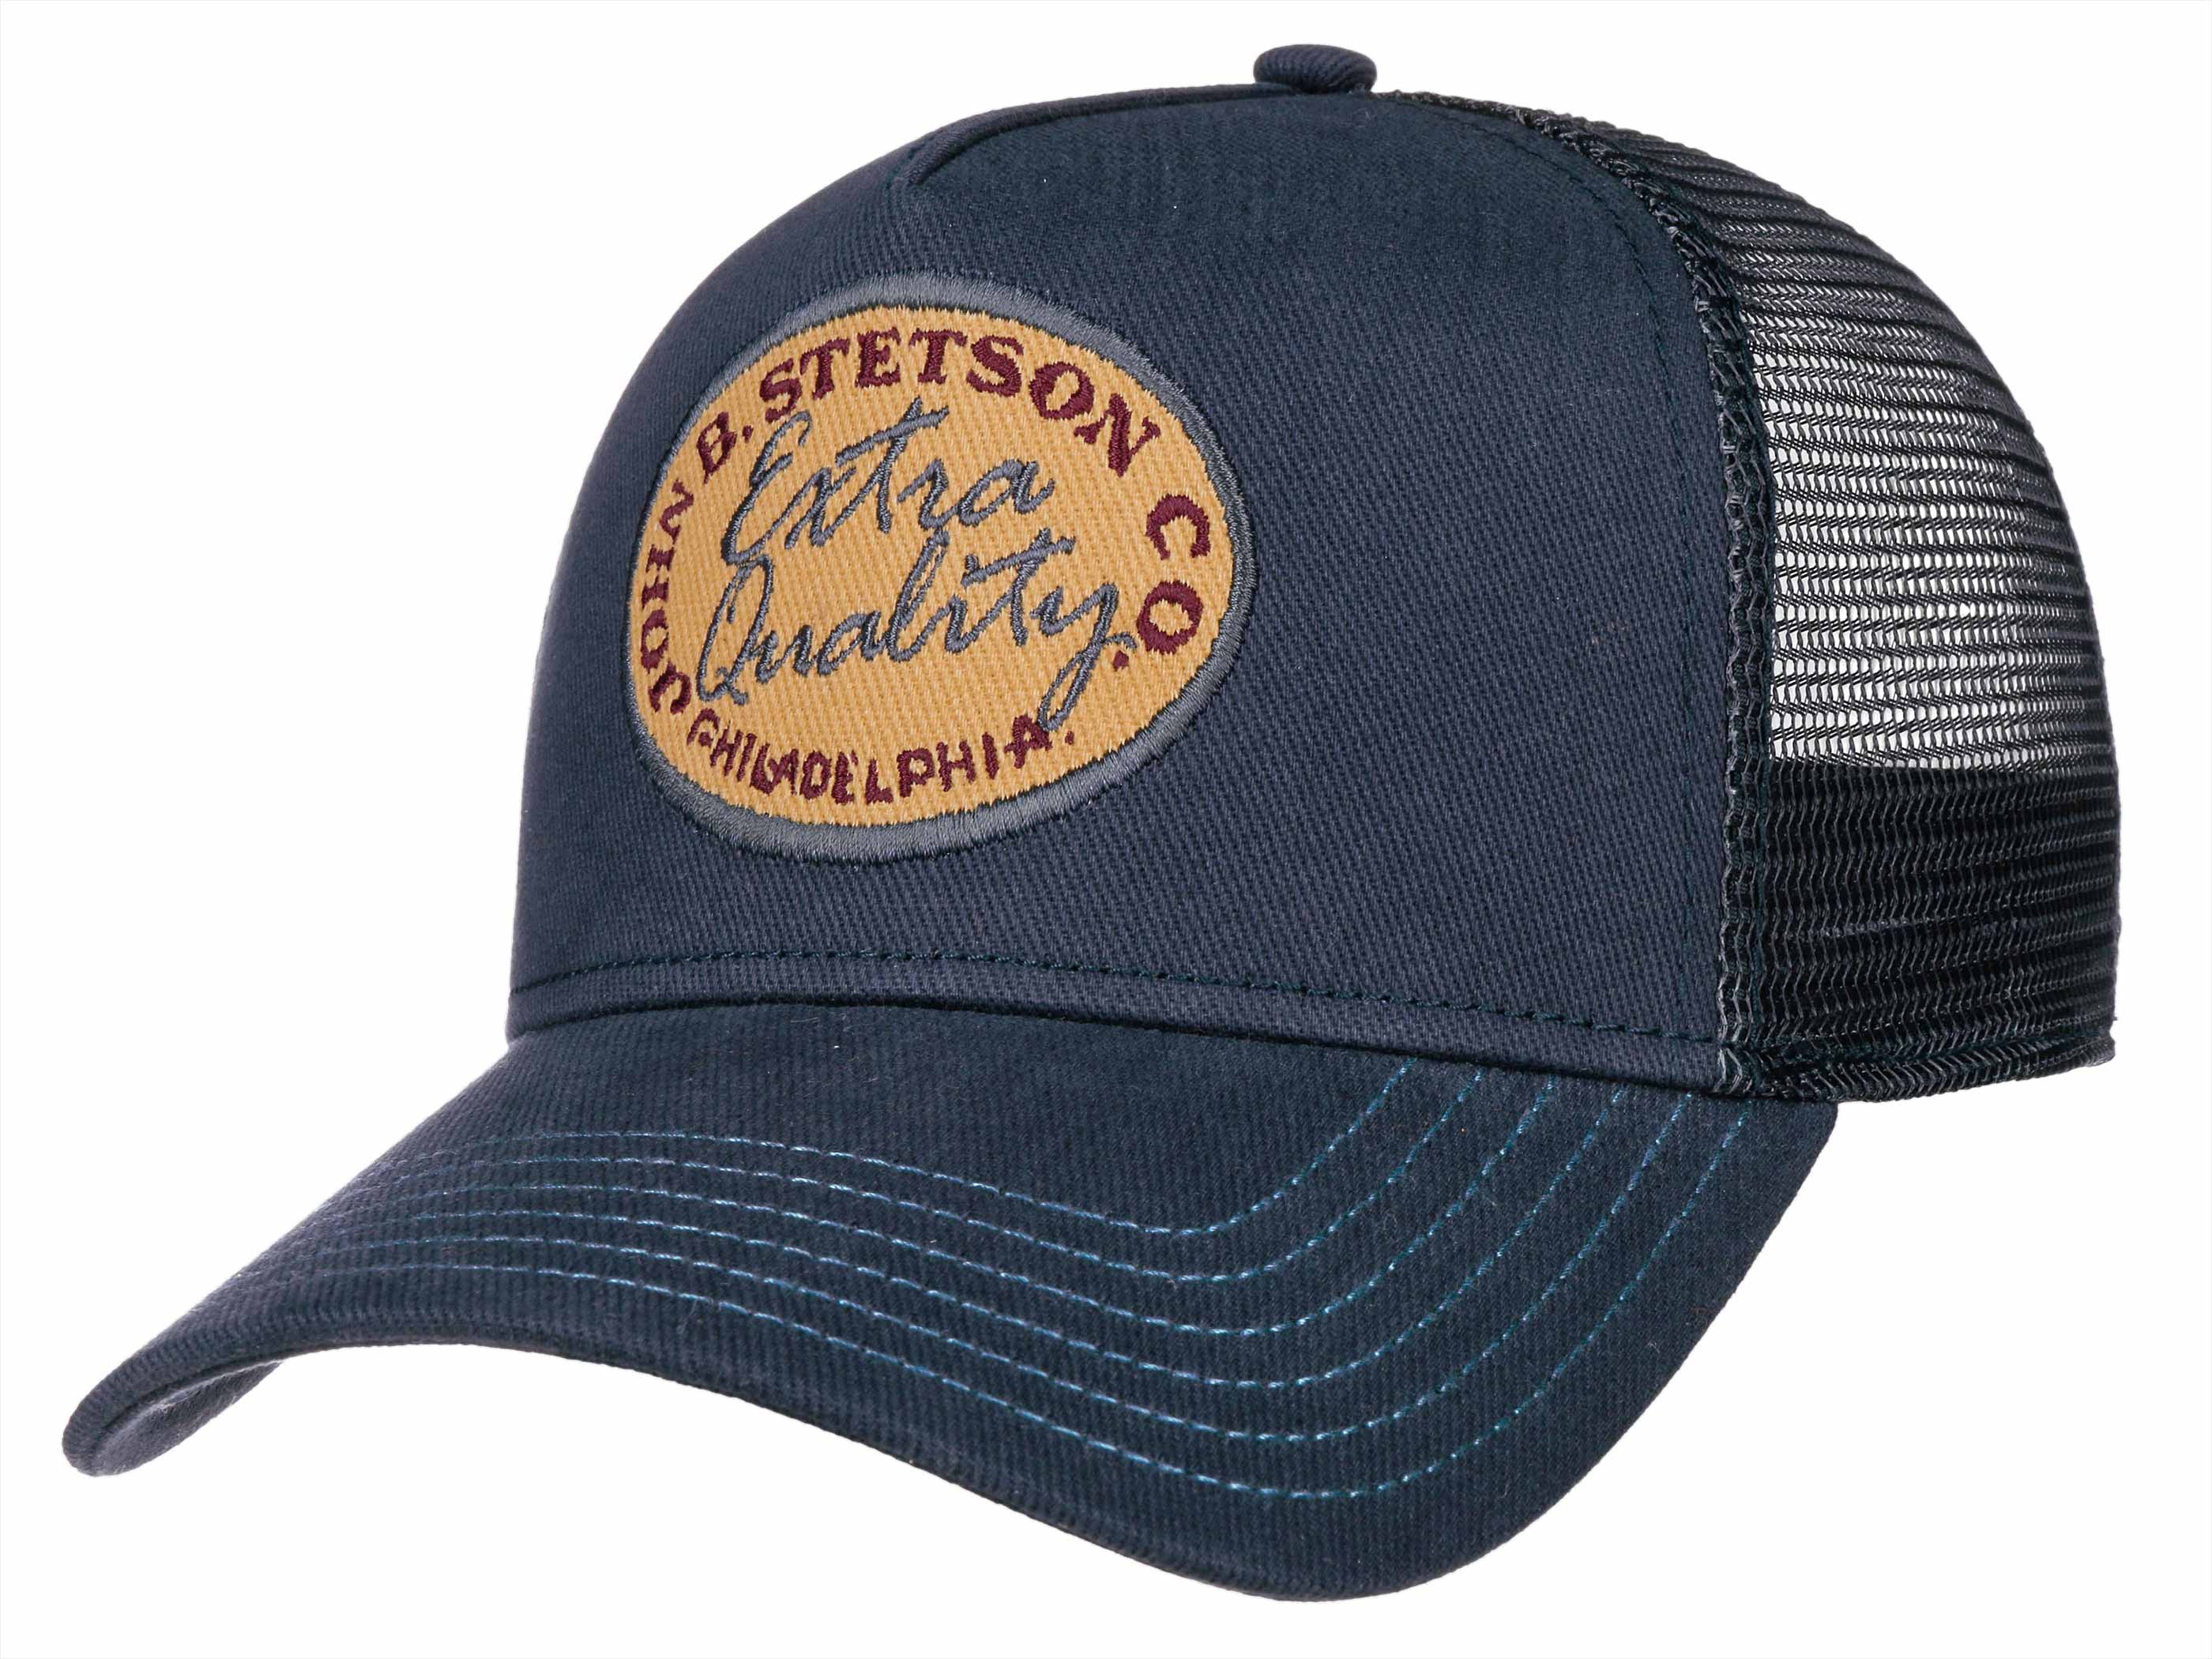 Stetson Trucker Cap Vintage Brushed Twill Mesh Baseball Cap